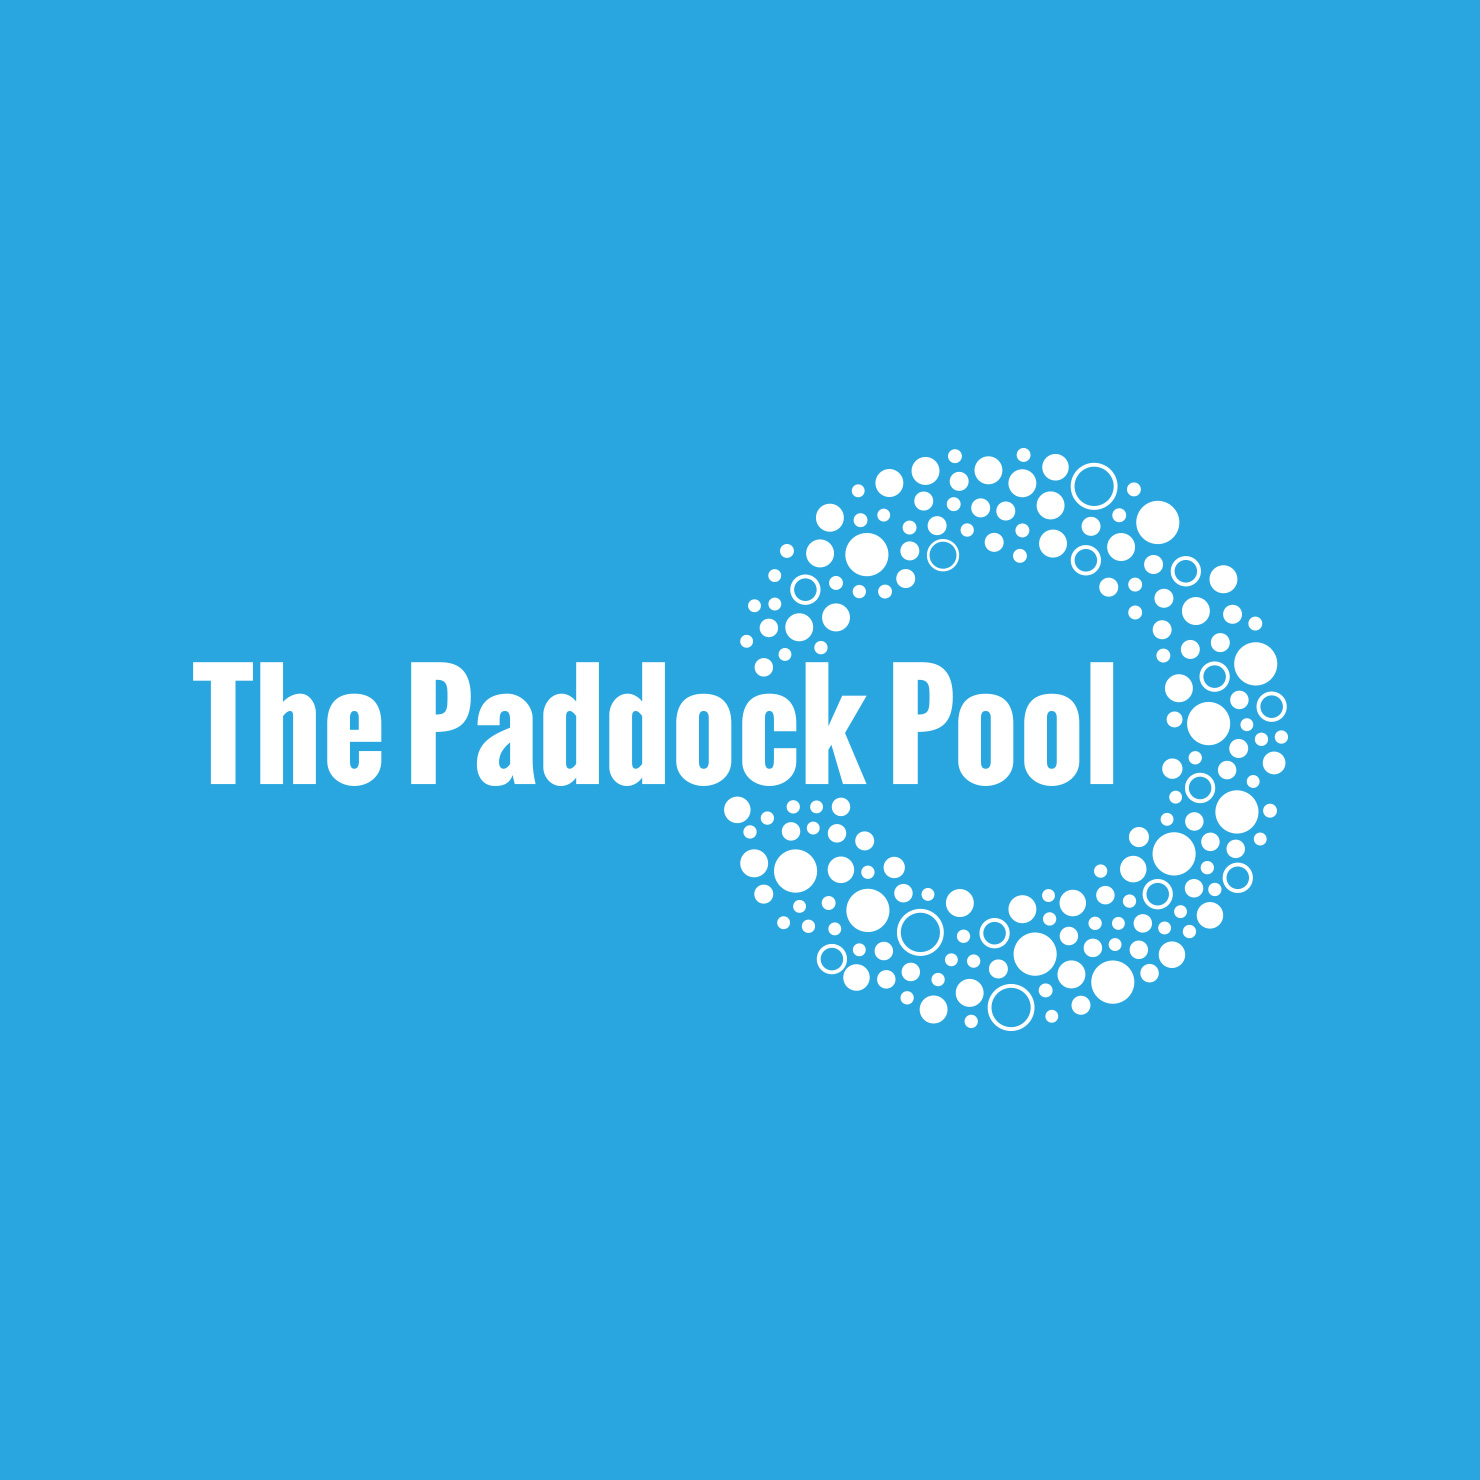 The Paddock Pool